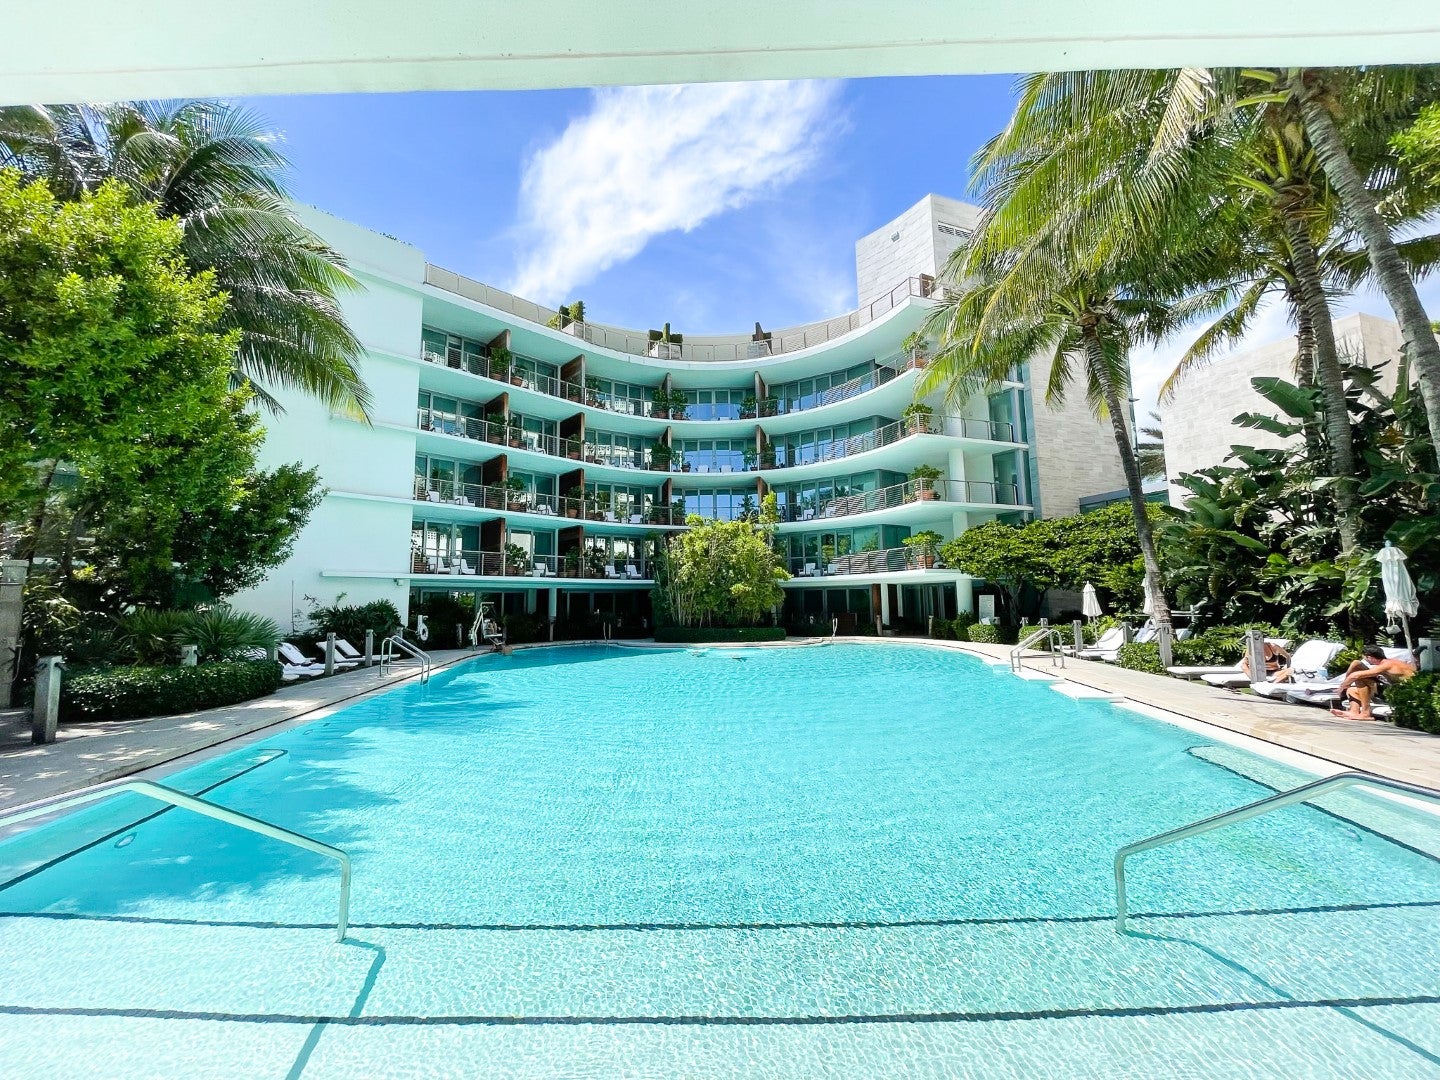 The Miami Beach EDITION Historic Pool